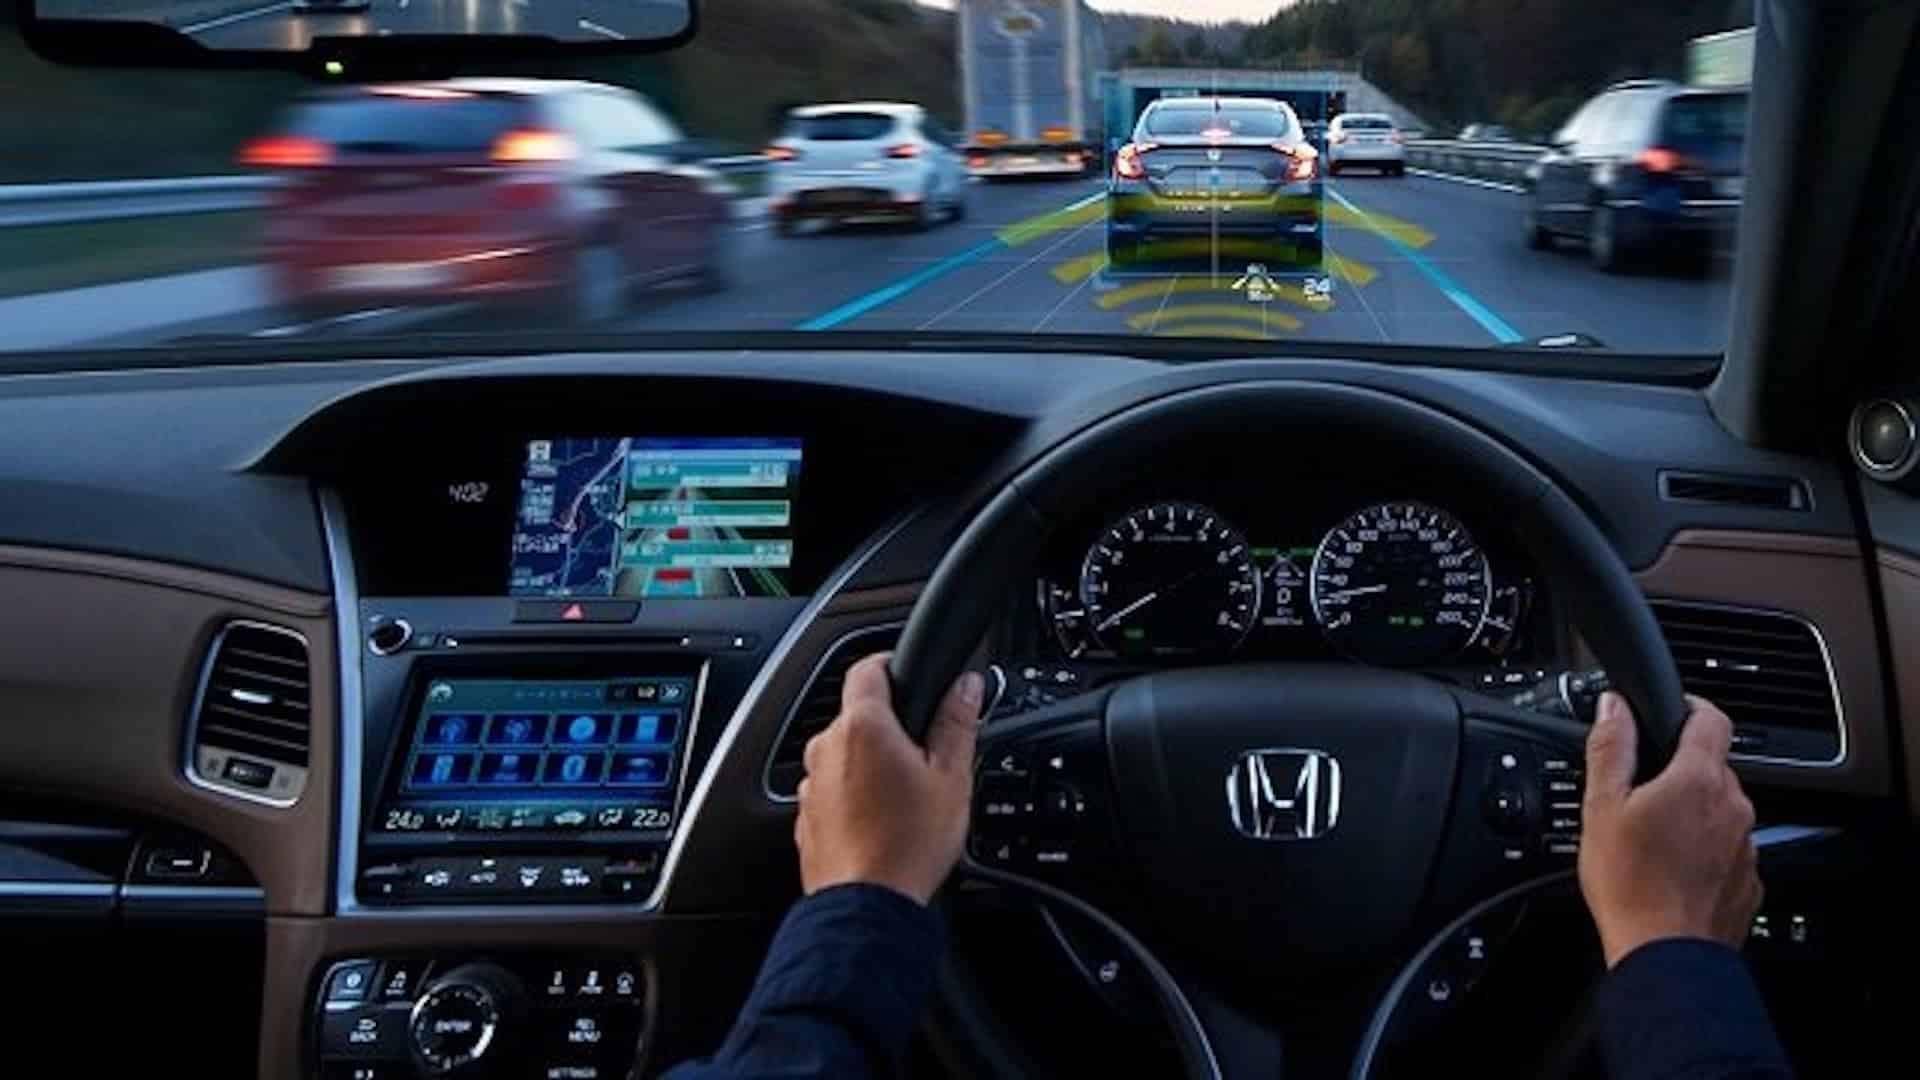 Aperçu du système de conduite autonome de Honda.